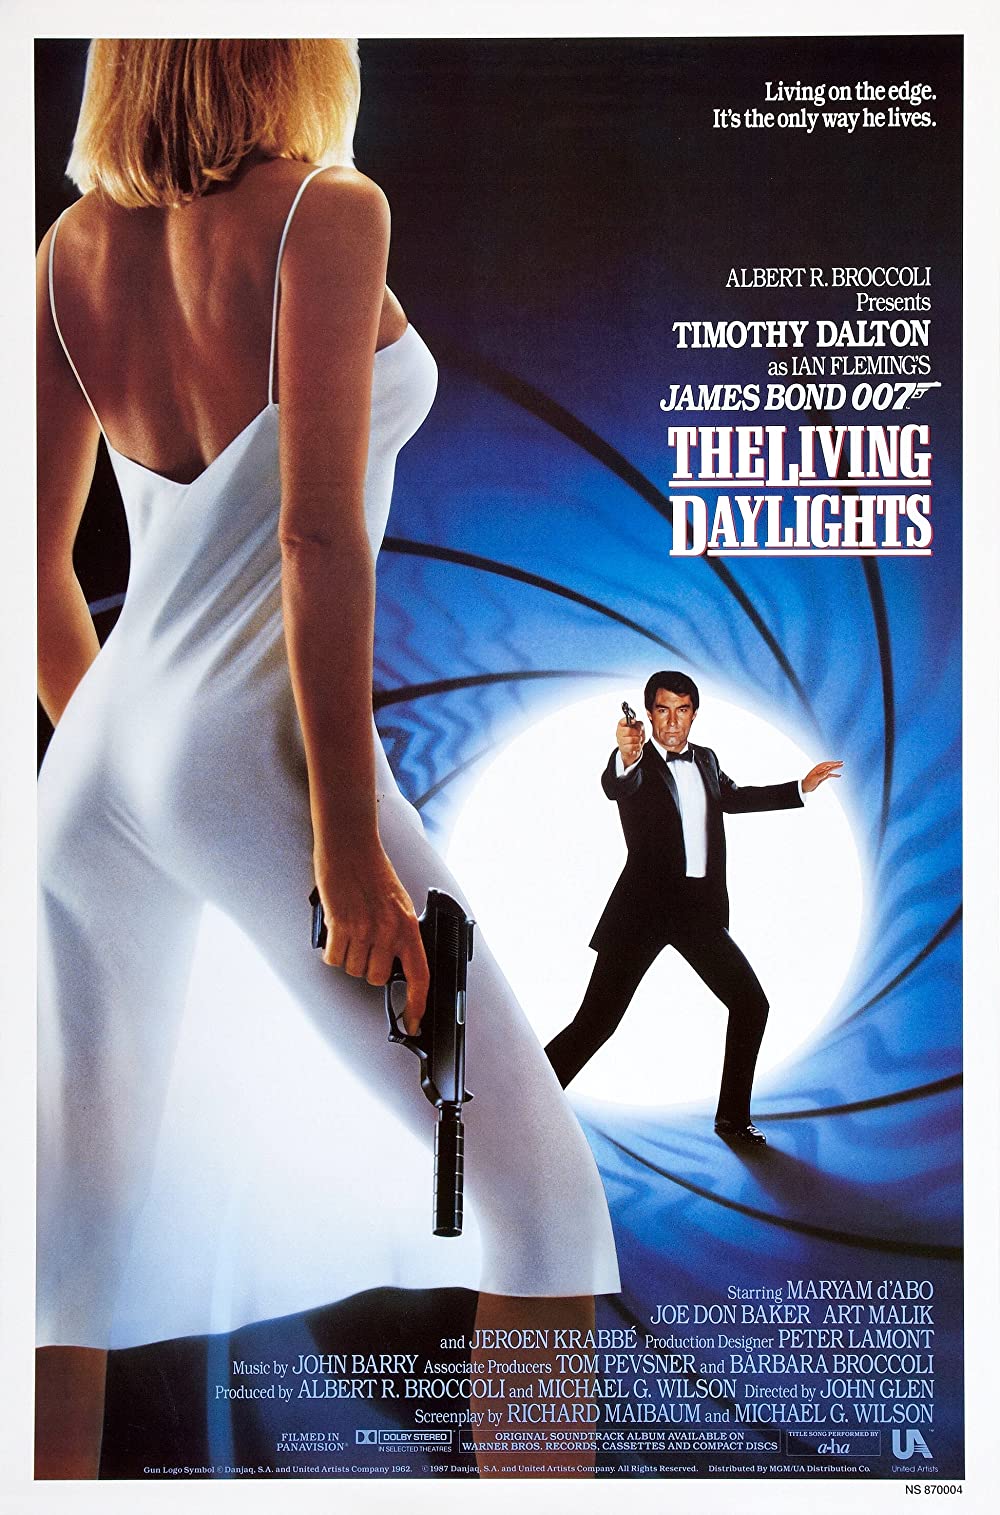 James Bond 007 The Living Daylights (1987)